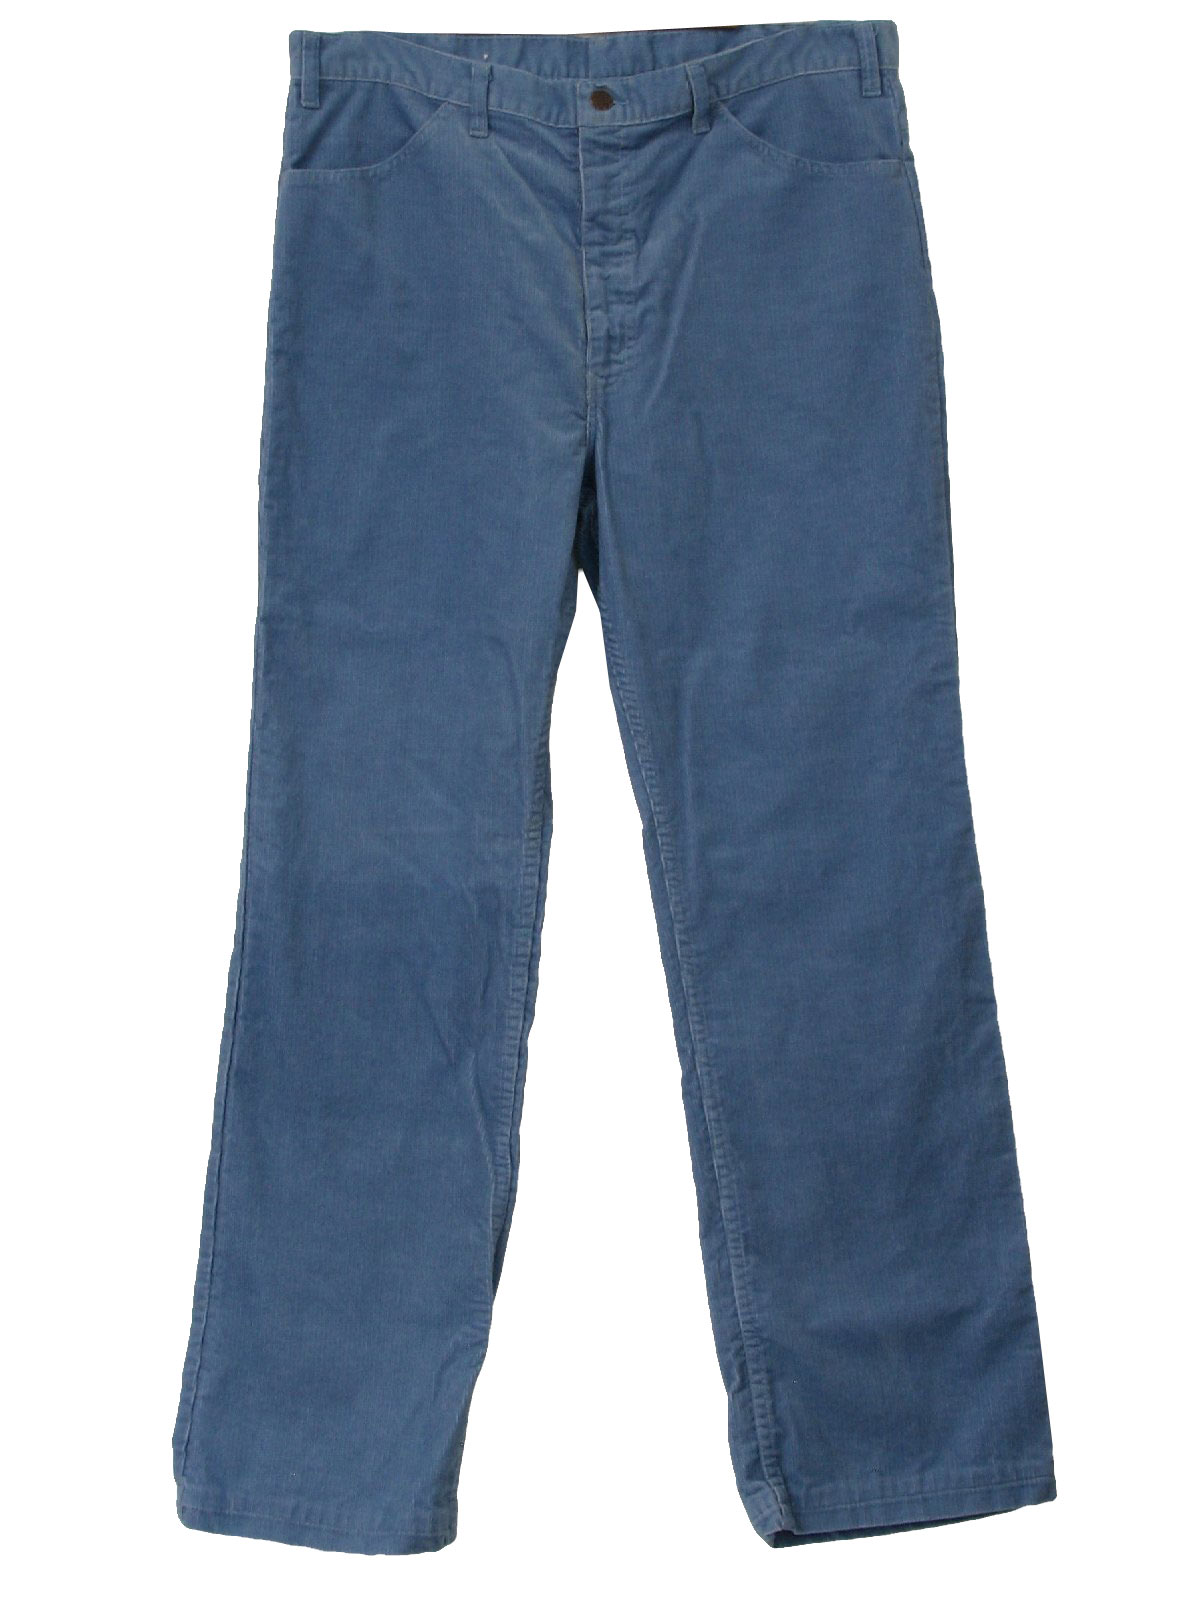 light blue corduroy pants mens